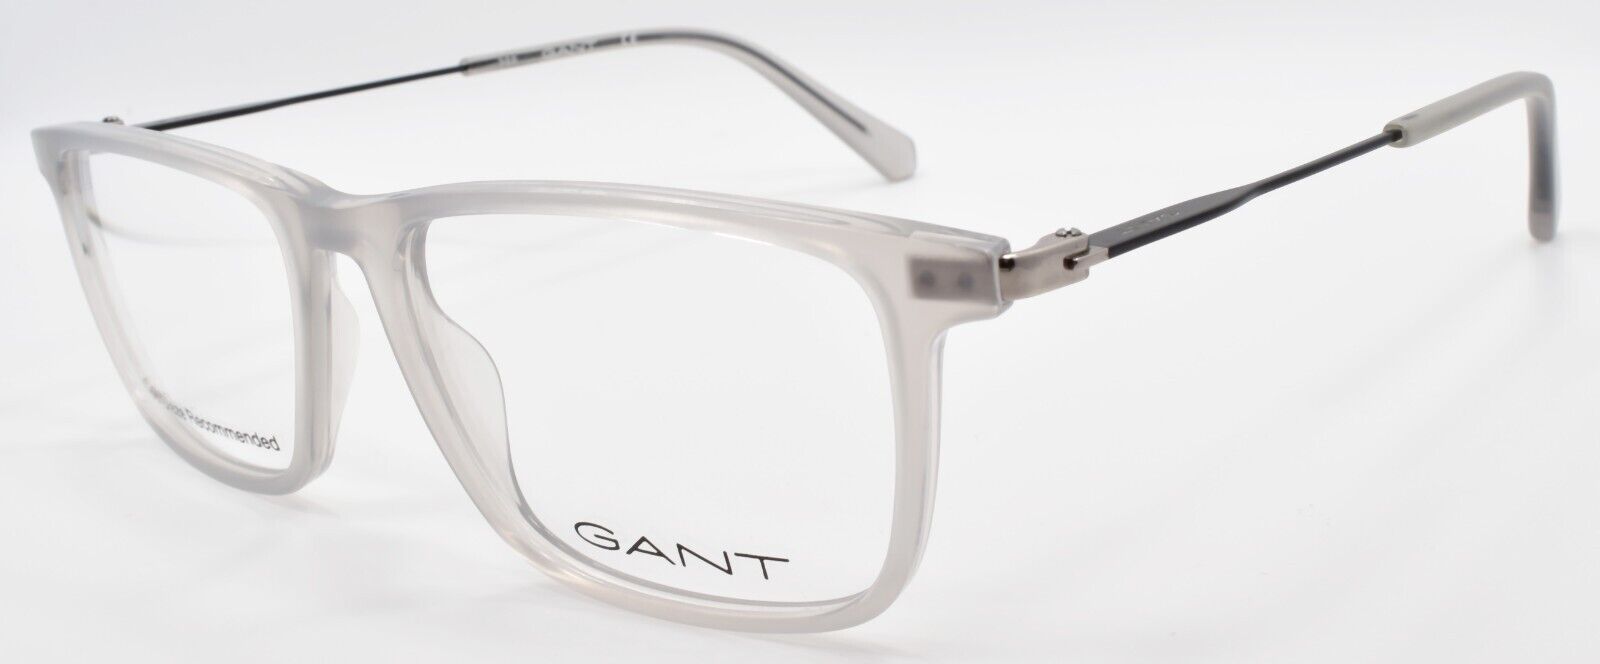 1-GANT GA3236 020 Men's Eyeglasses Frames 53-16-145 Grey Crystal-889214276698-IKSpecs